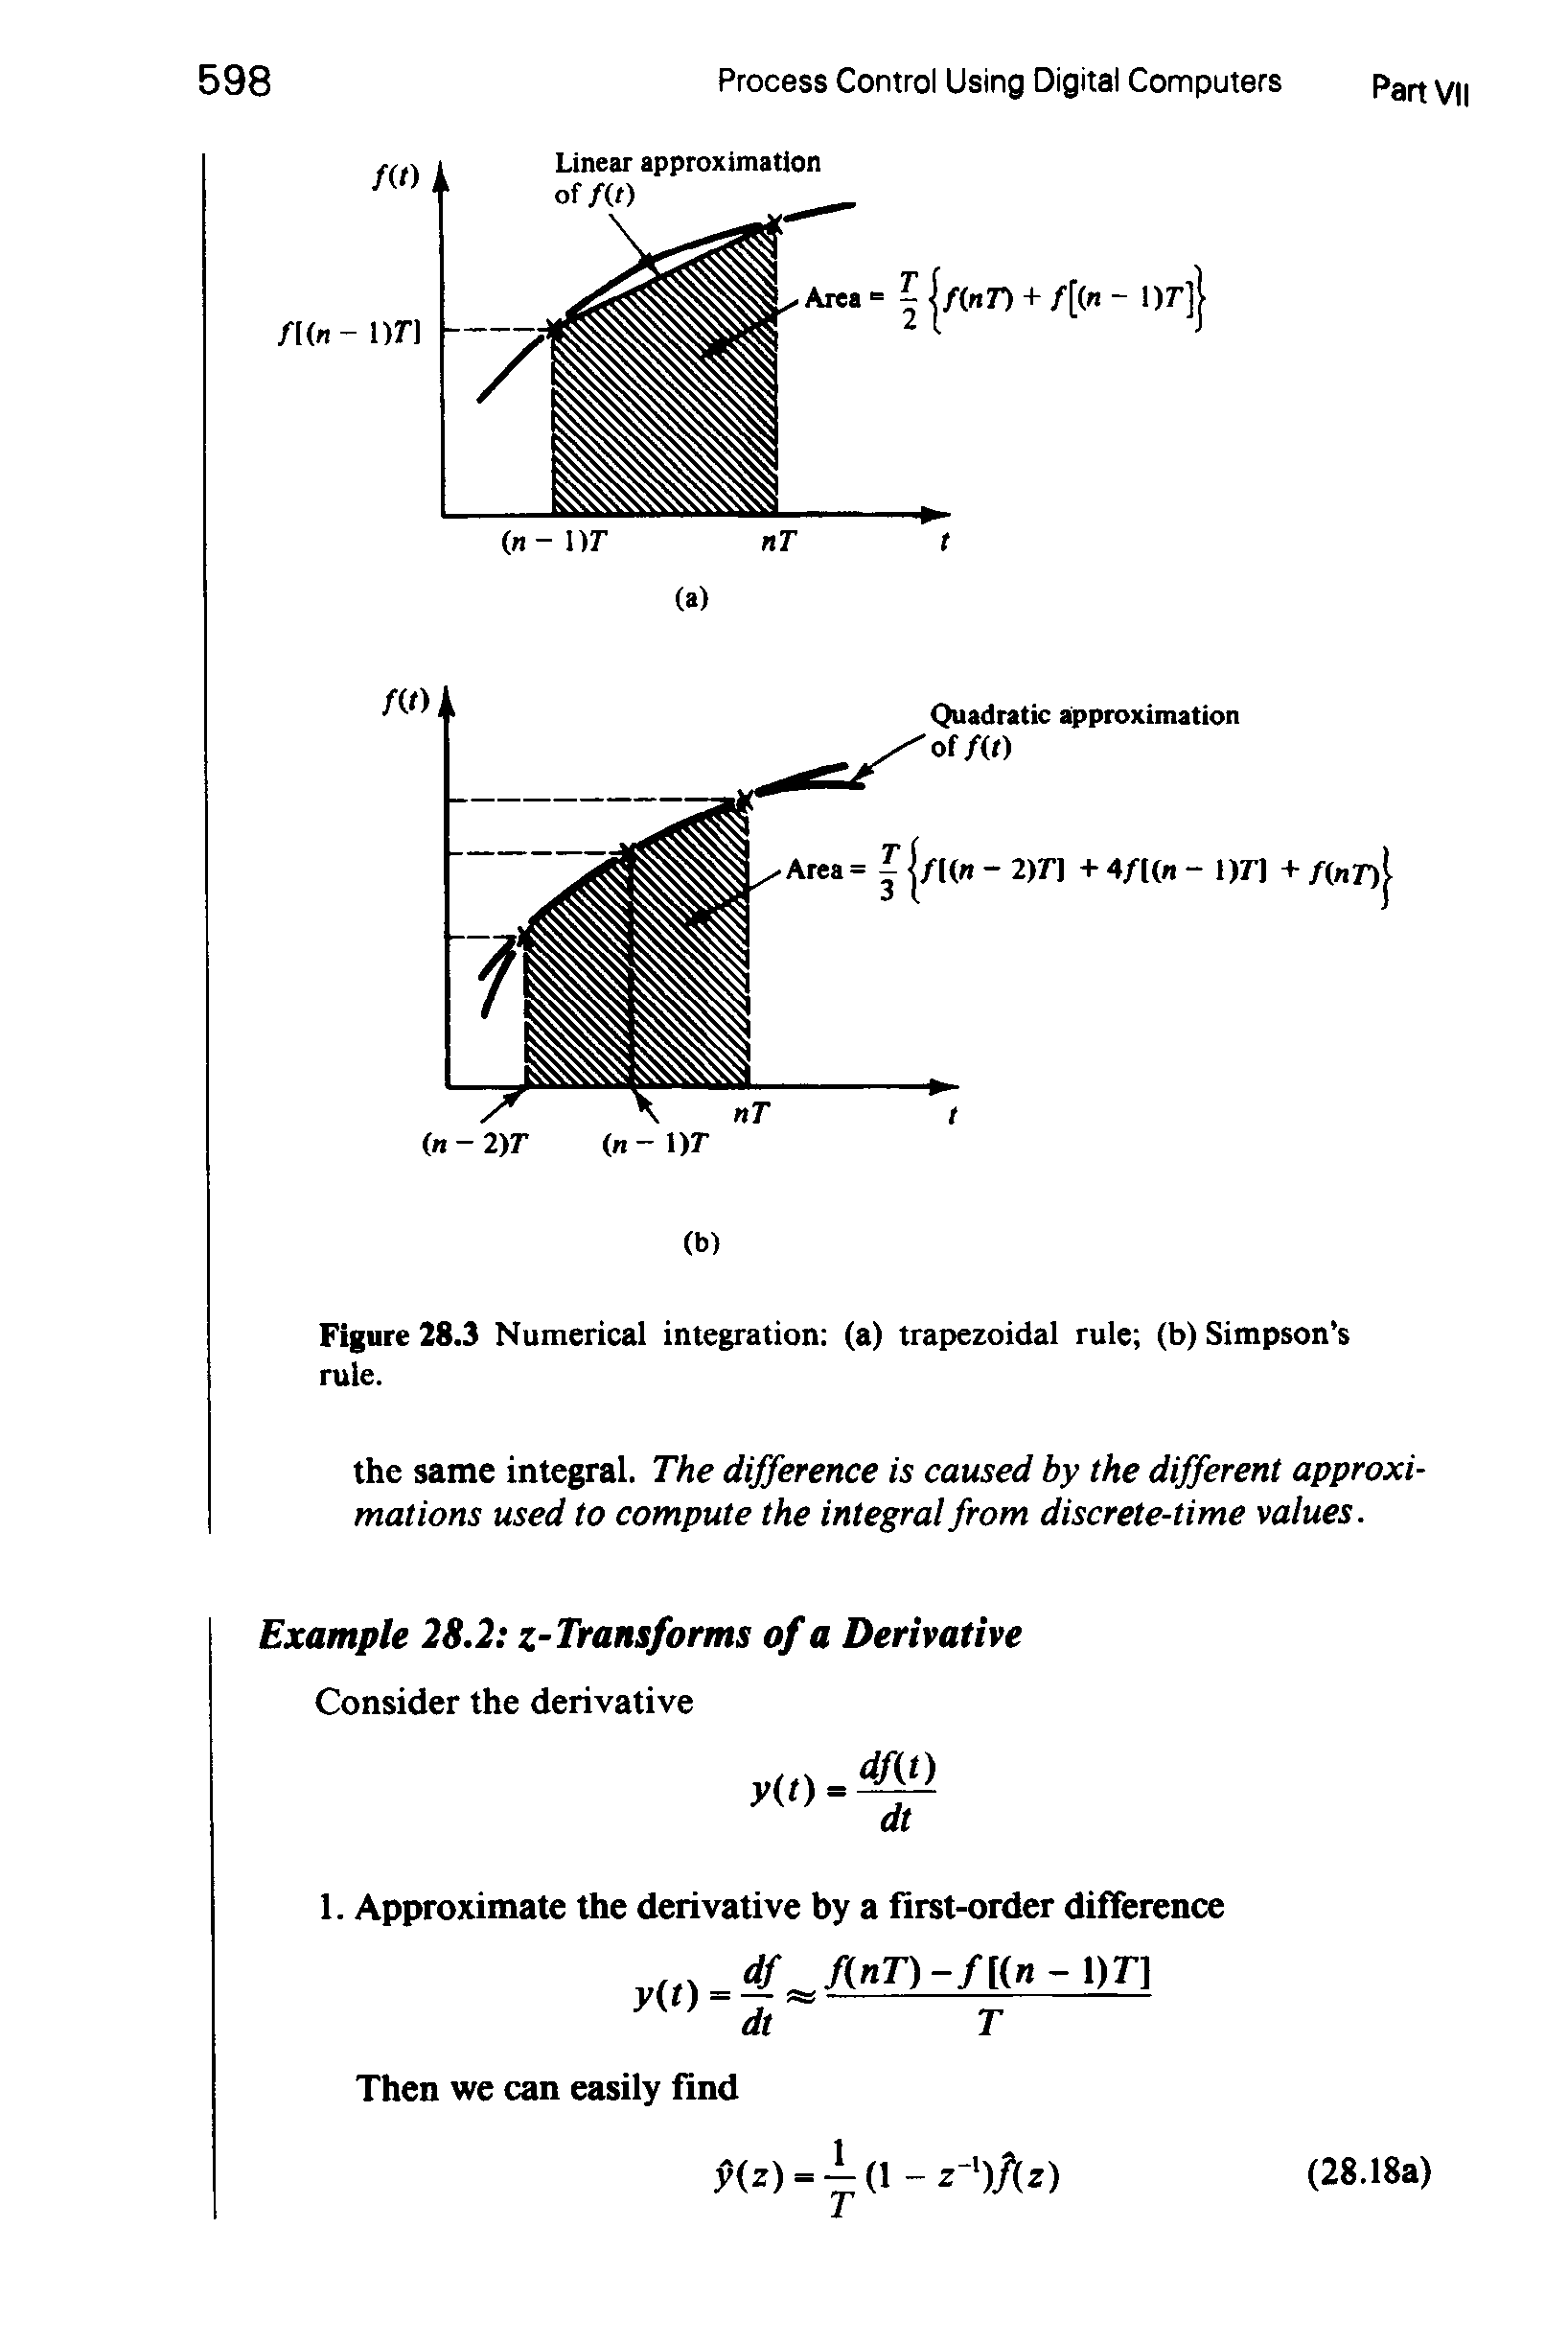 Figure 28.3 Numerical integration (a) trapezoidal rule (b) Simpson s rule.